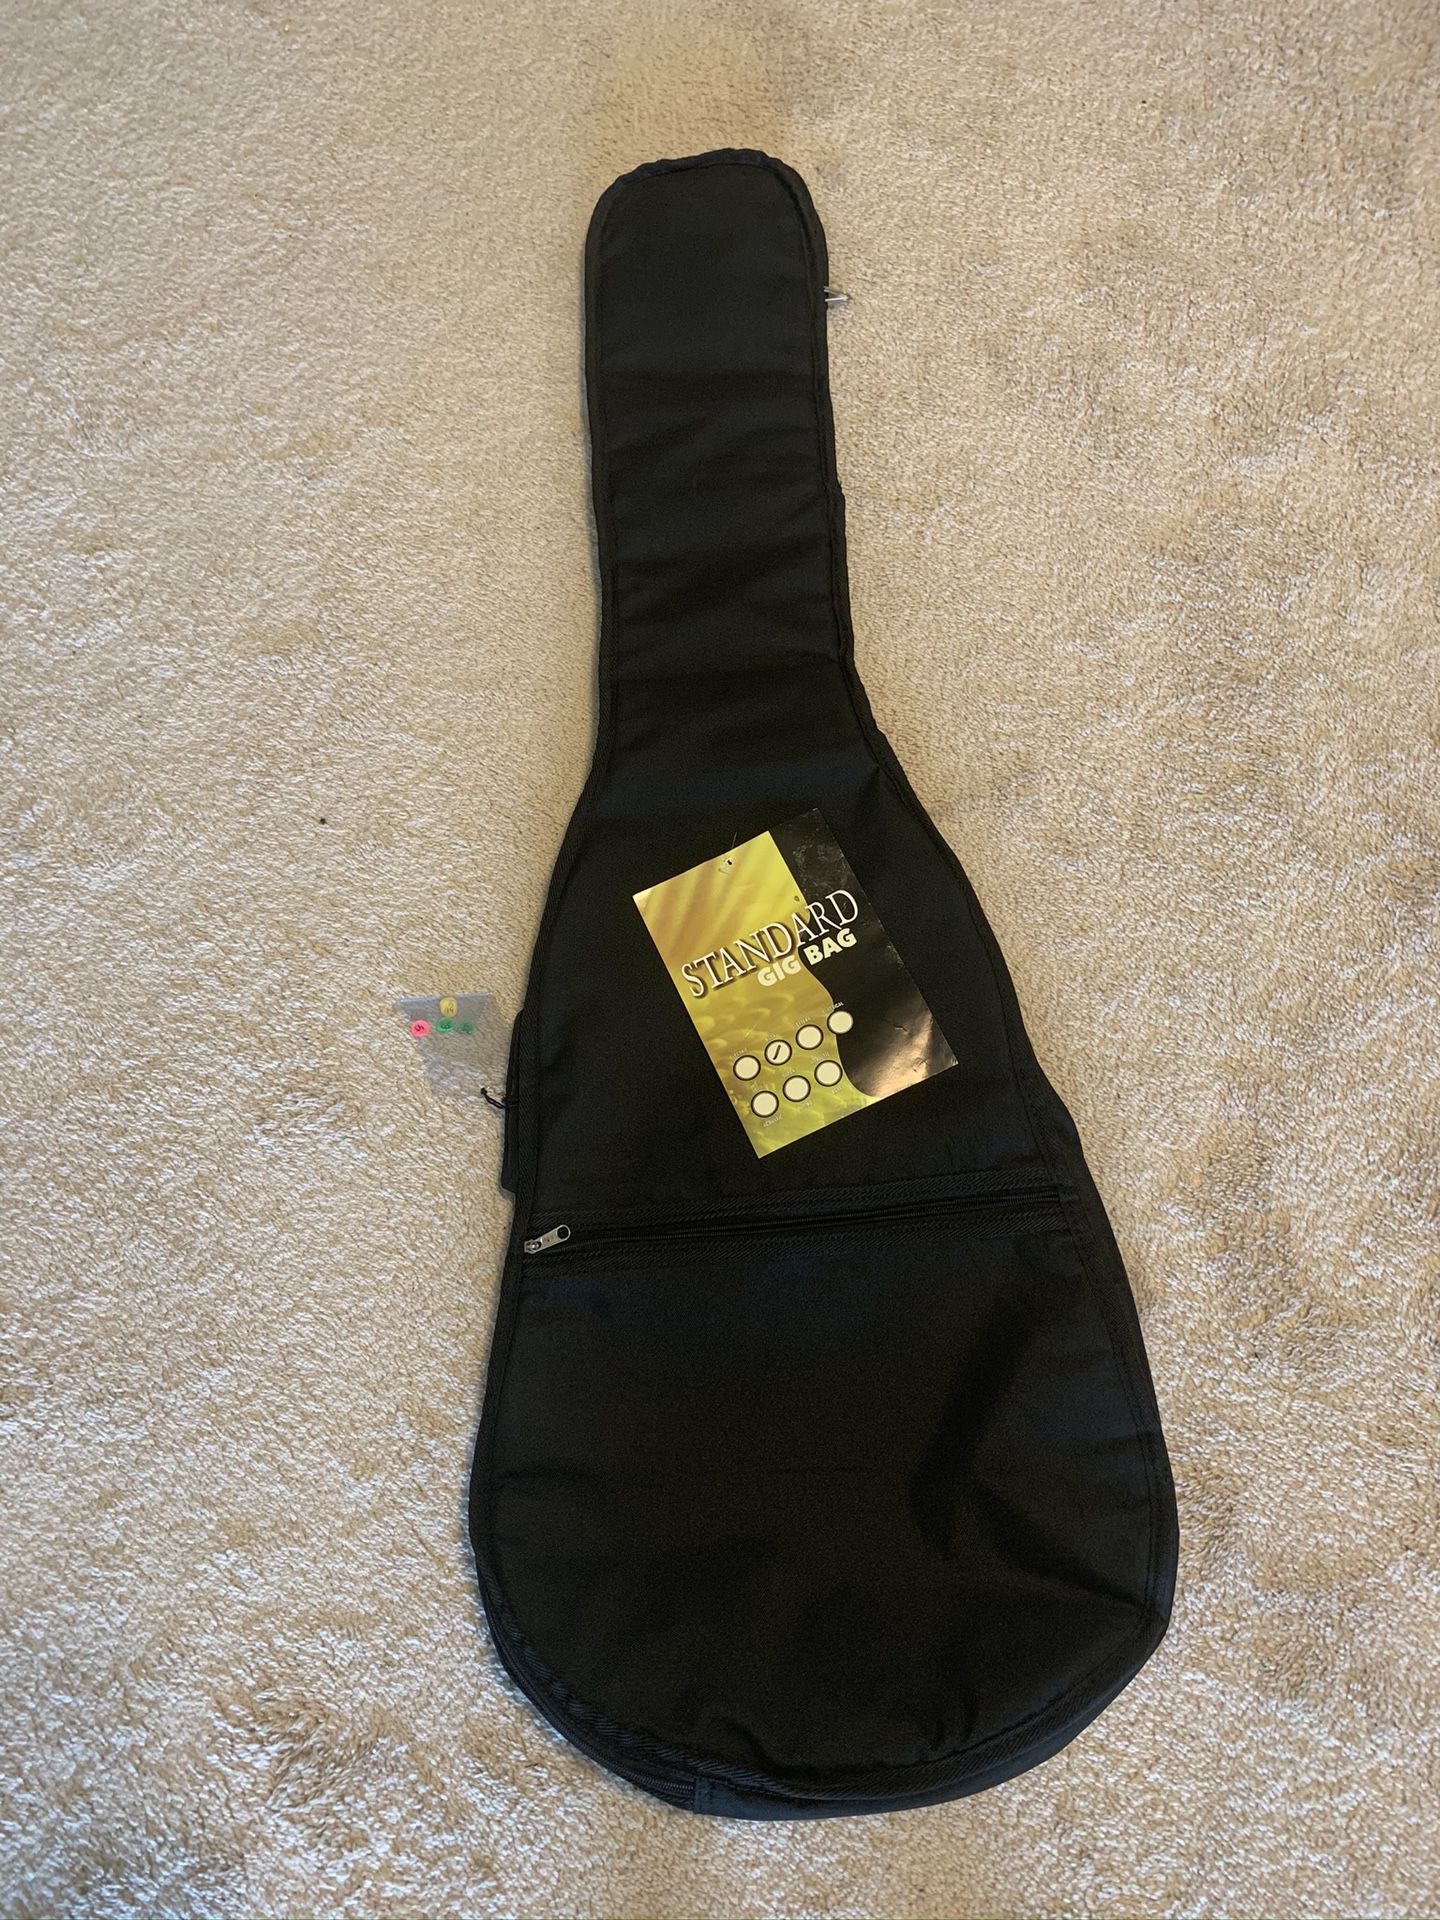 Standard gig bag for bass guitar